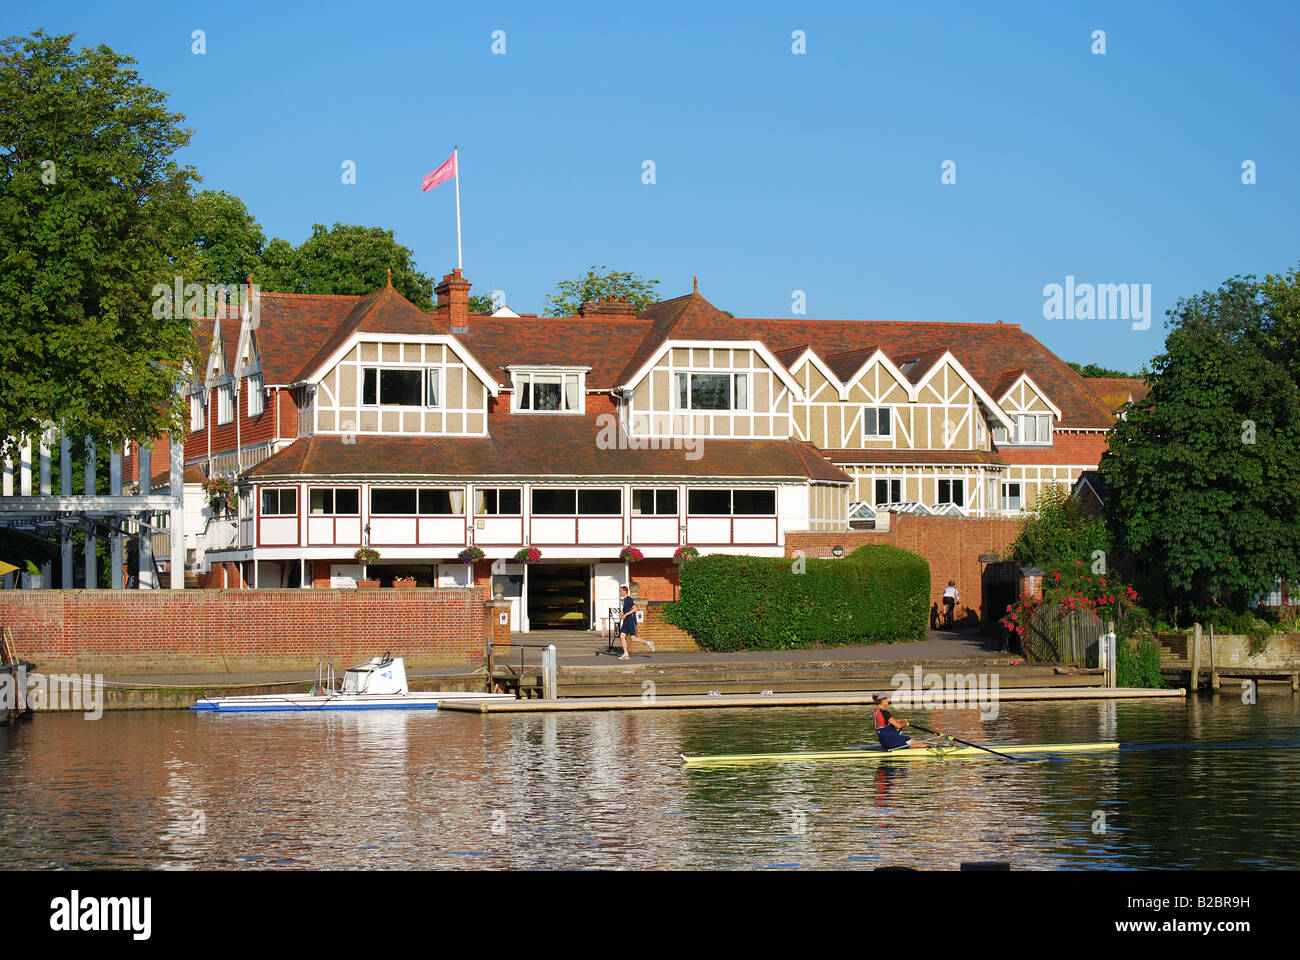 Leander Rowing Club, River Thames, Henley-on-Thames 